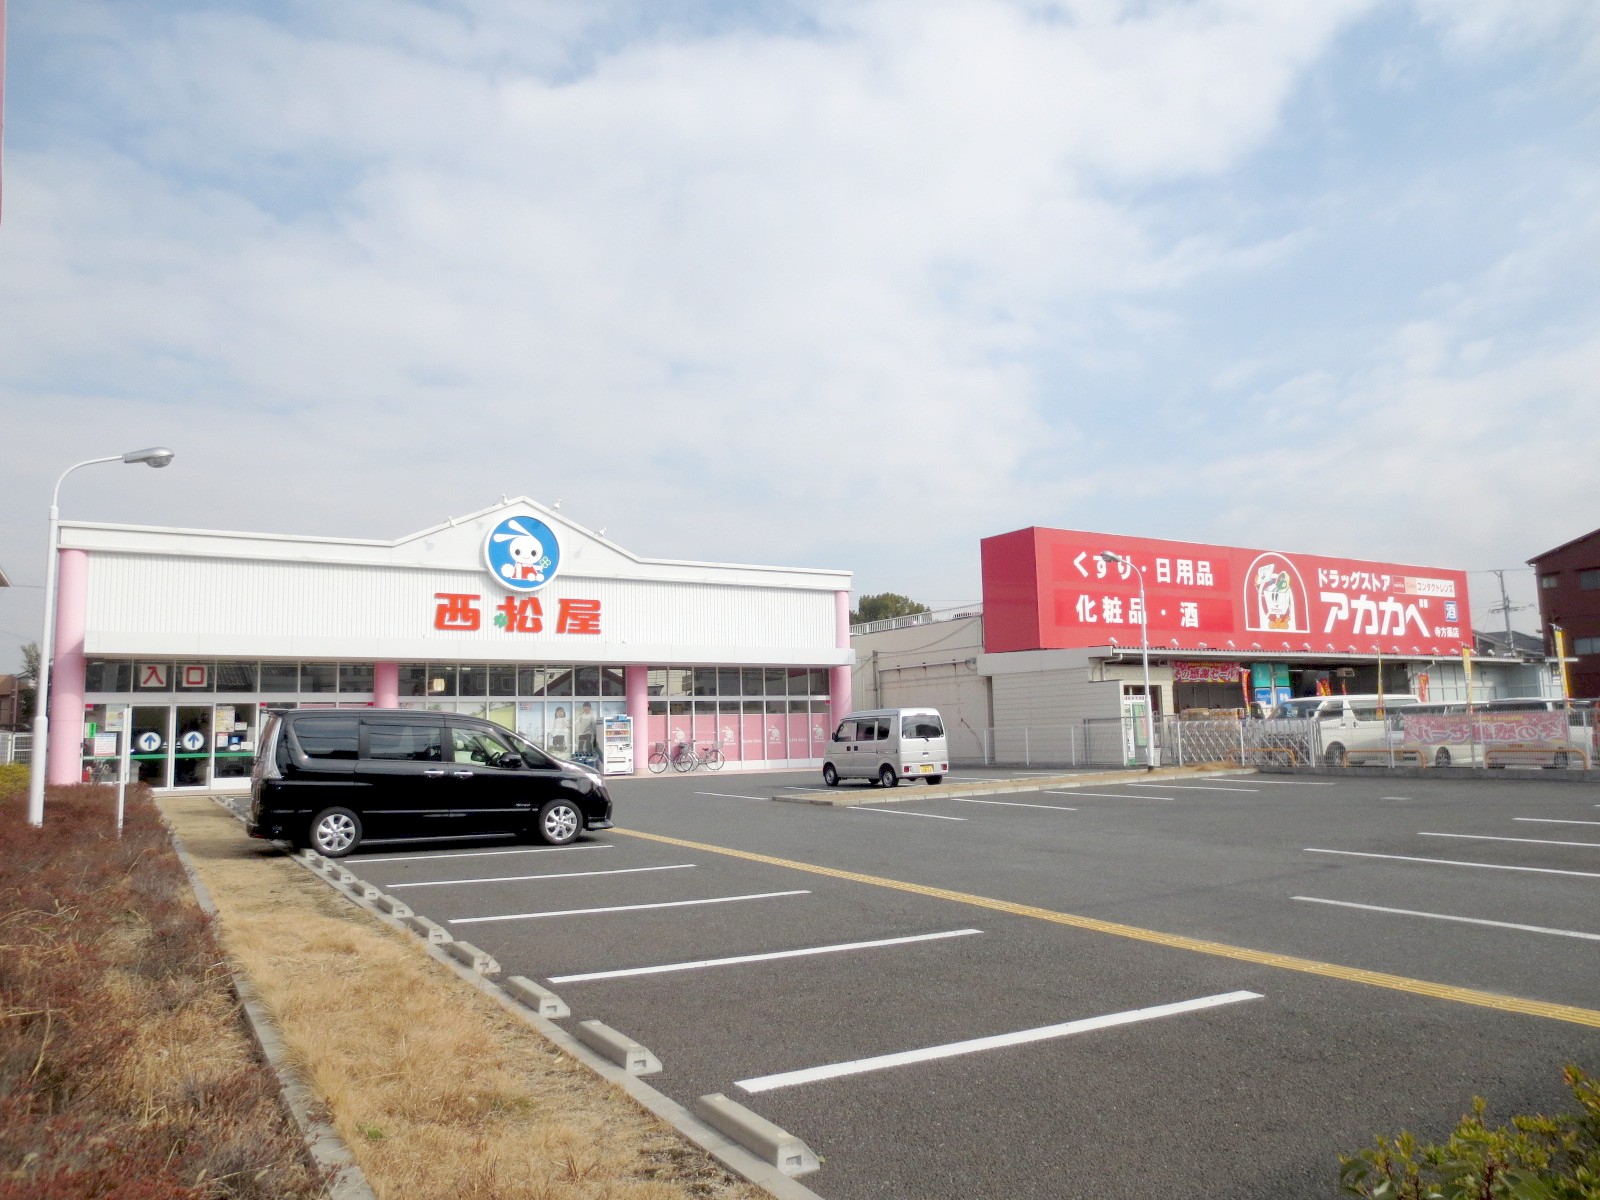 Shopping centre. 639m until Nishimatsuya Moriguchi Teragata store (shopping center)